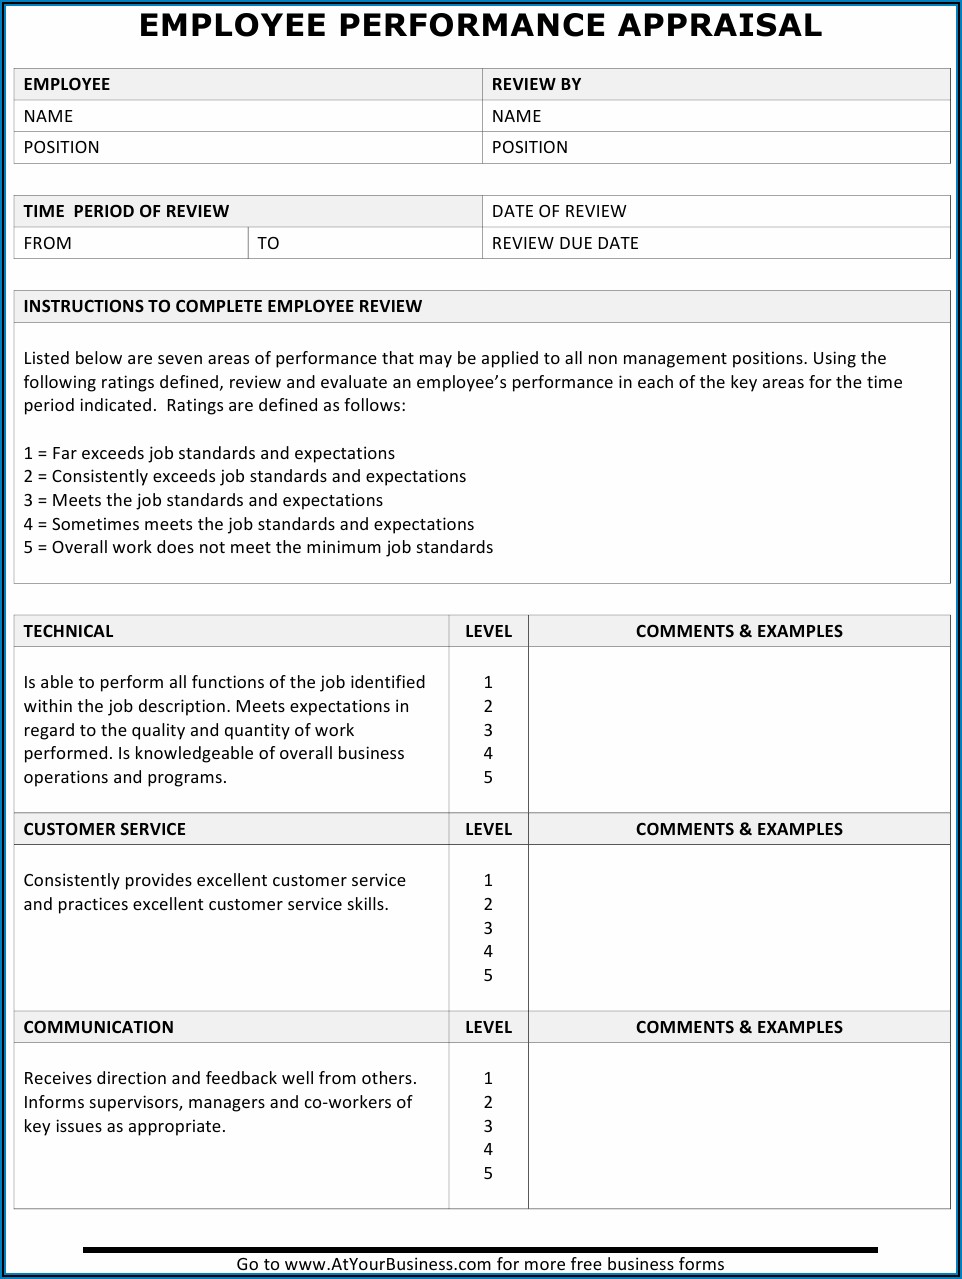 Employee Performance Appraisal Form Pdf